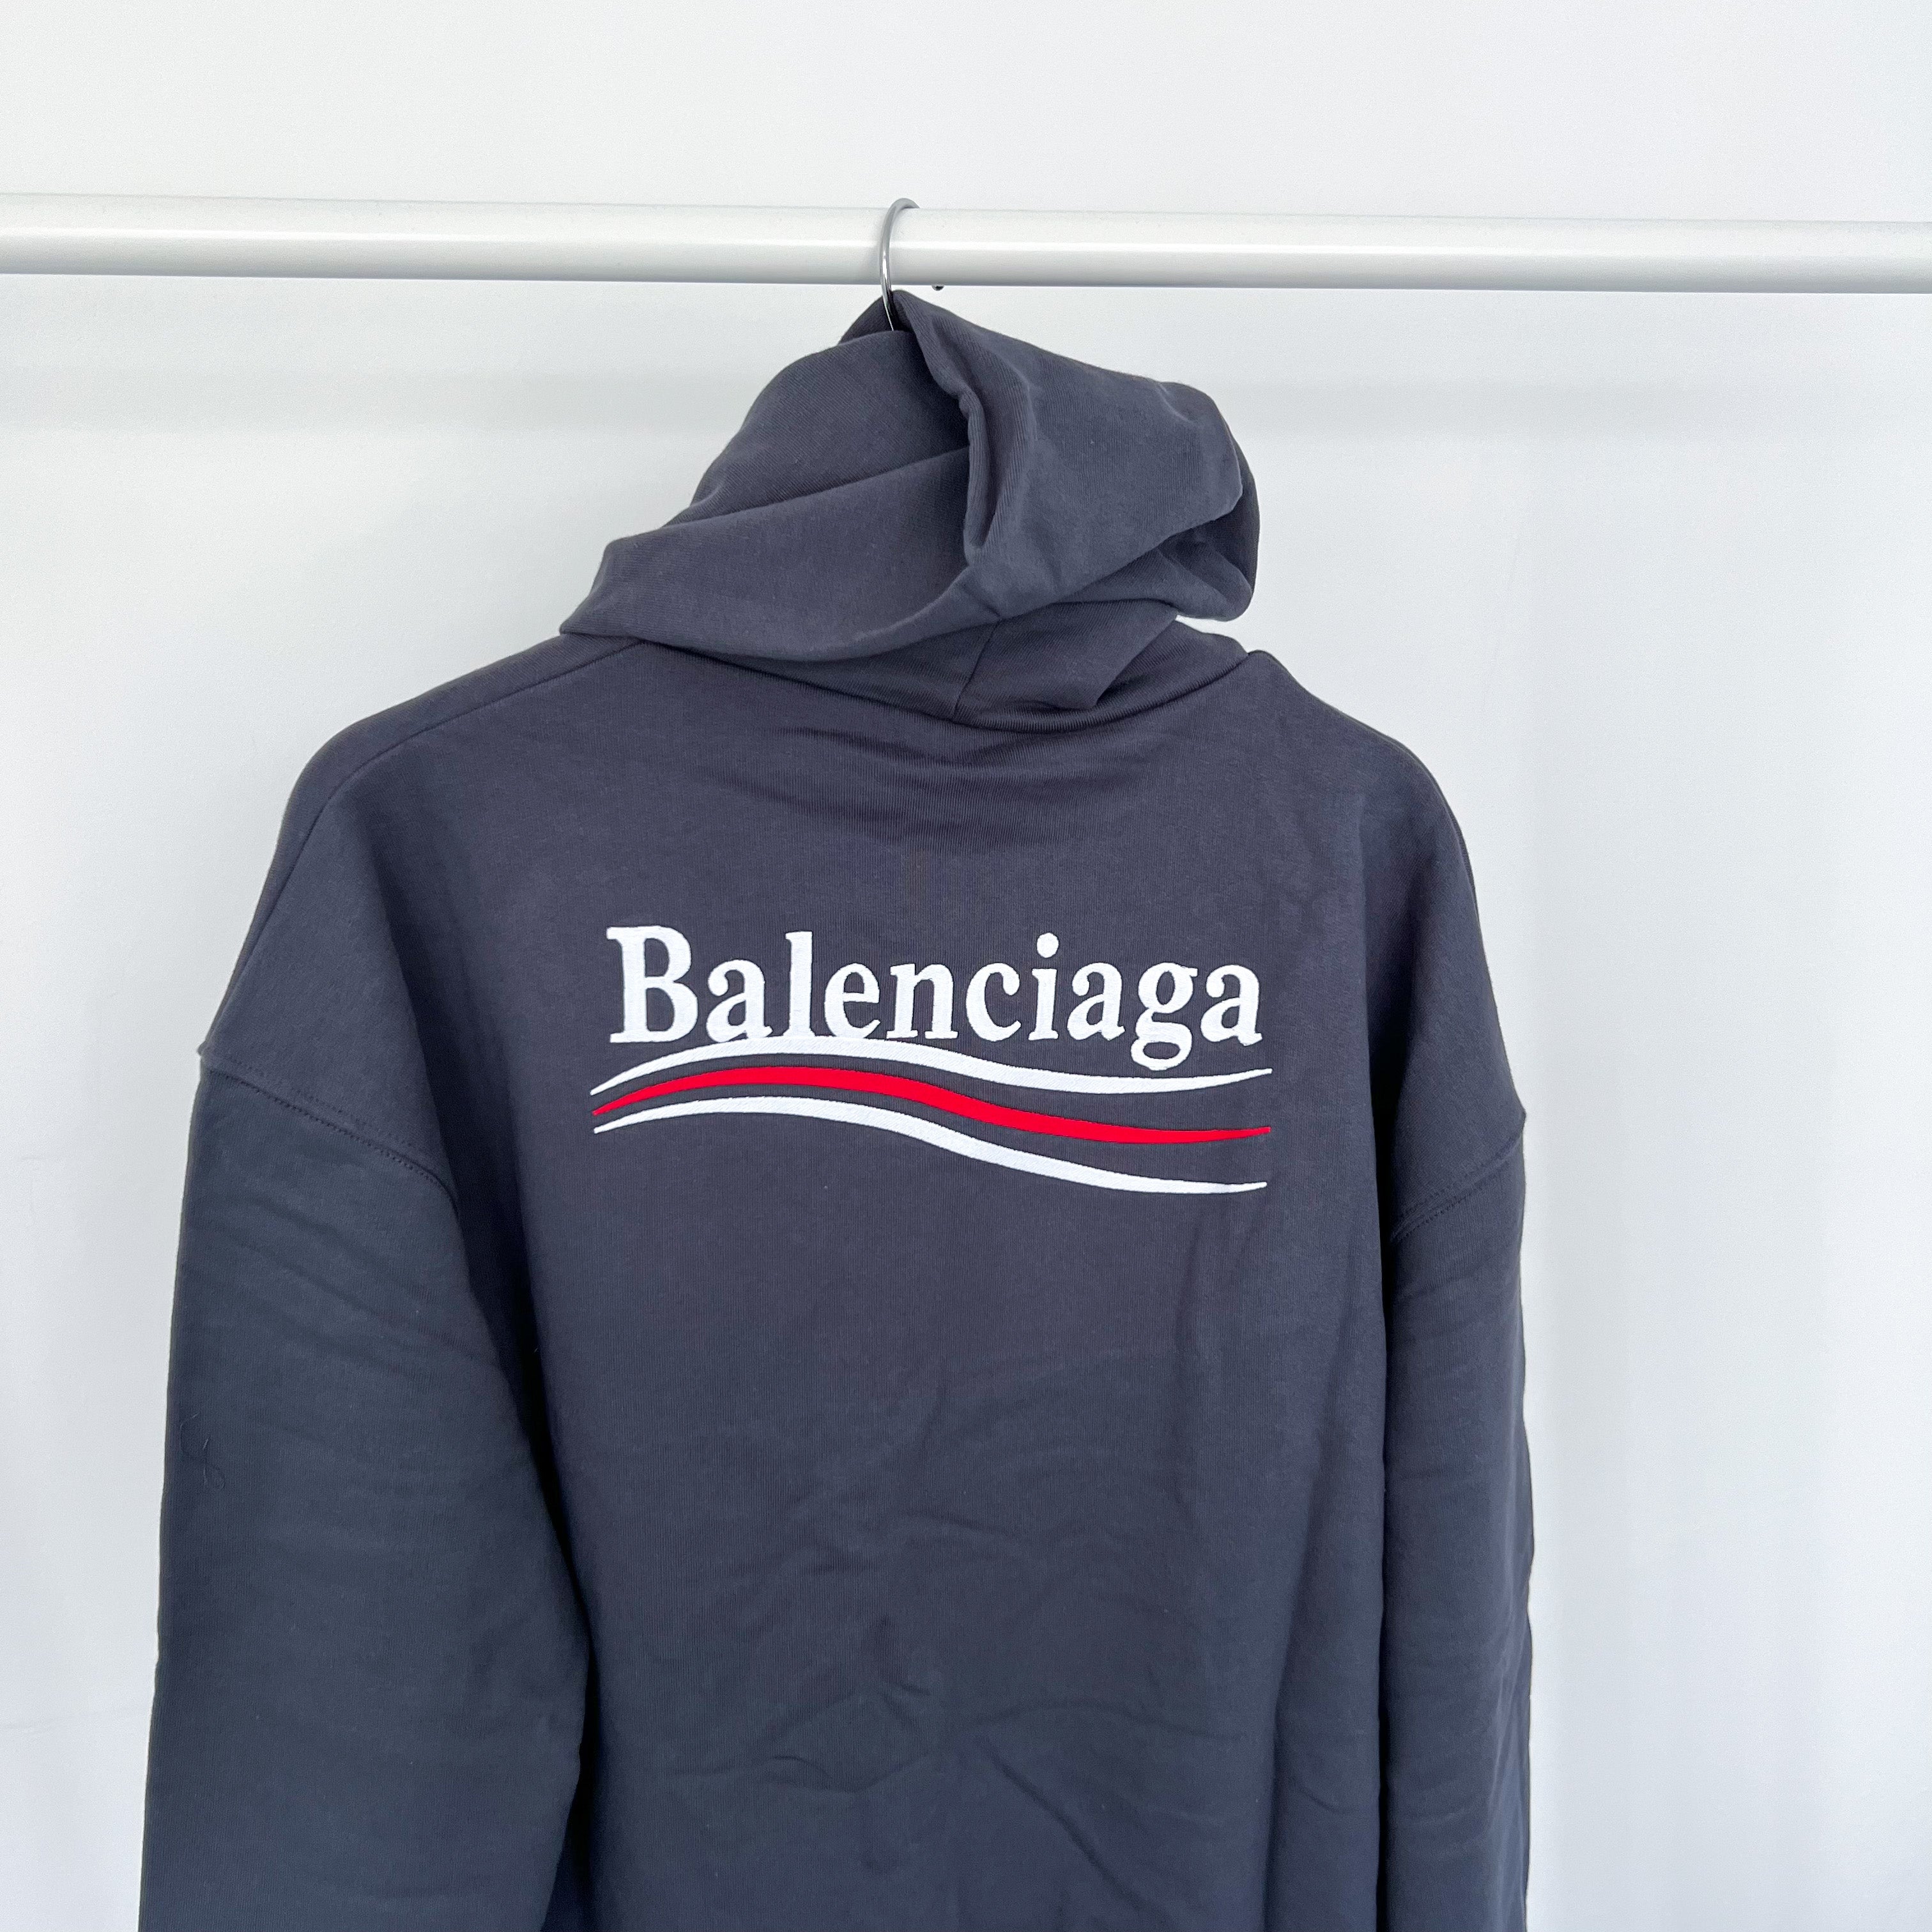 Balanciaga Embroidered Campaign Hoodie - Dark Grey